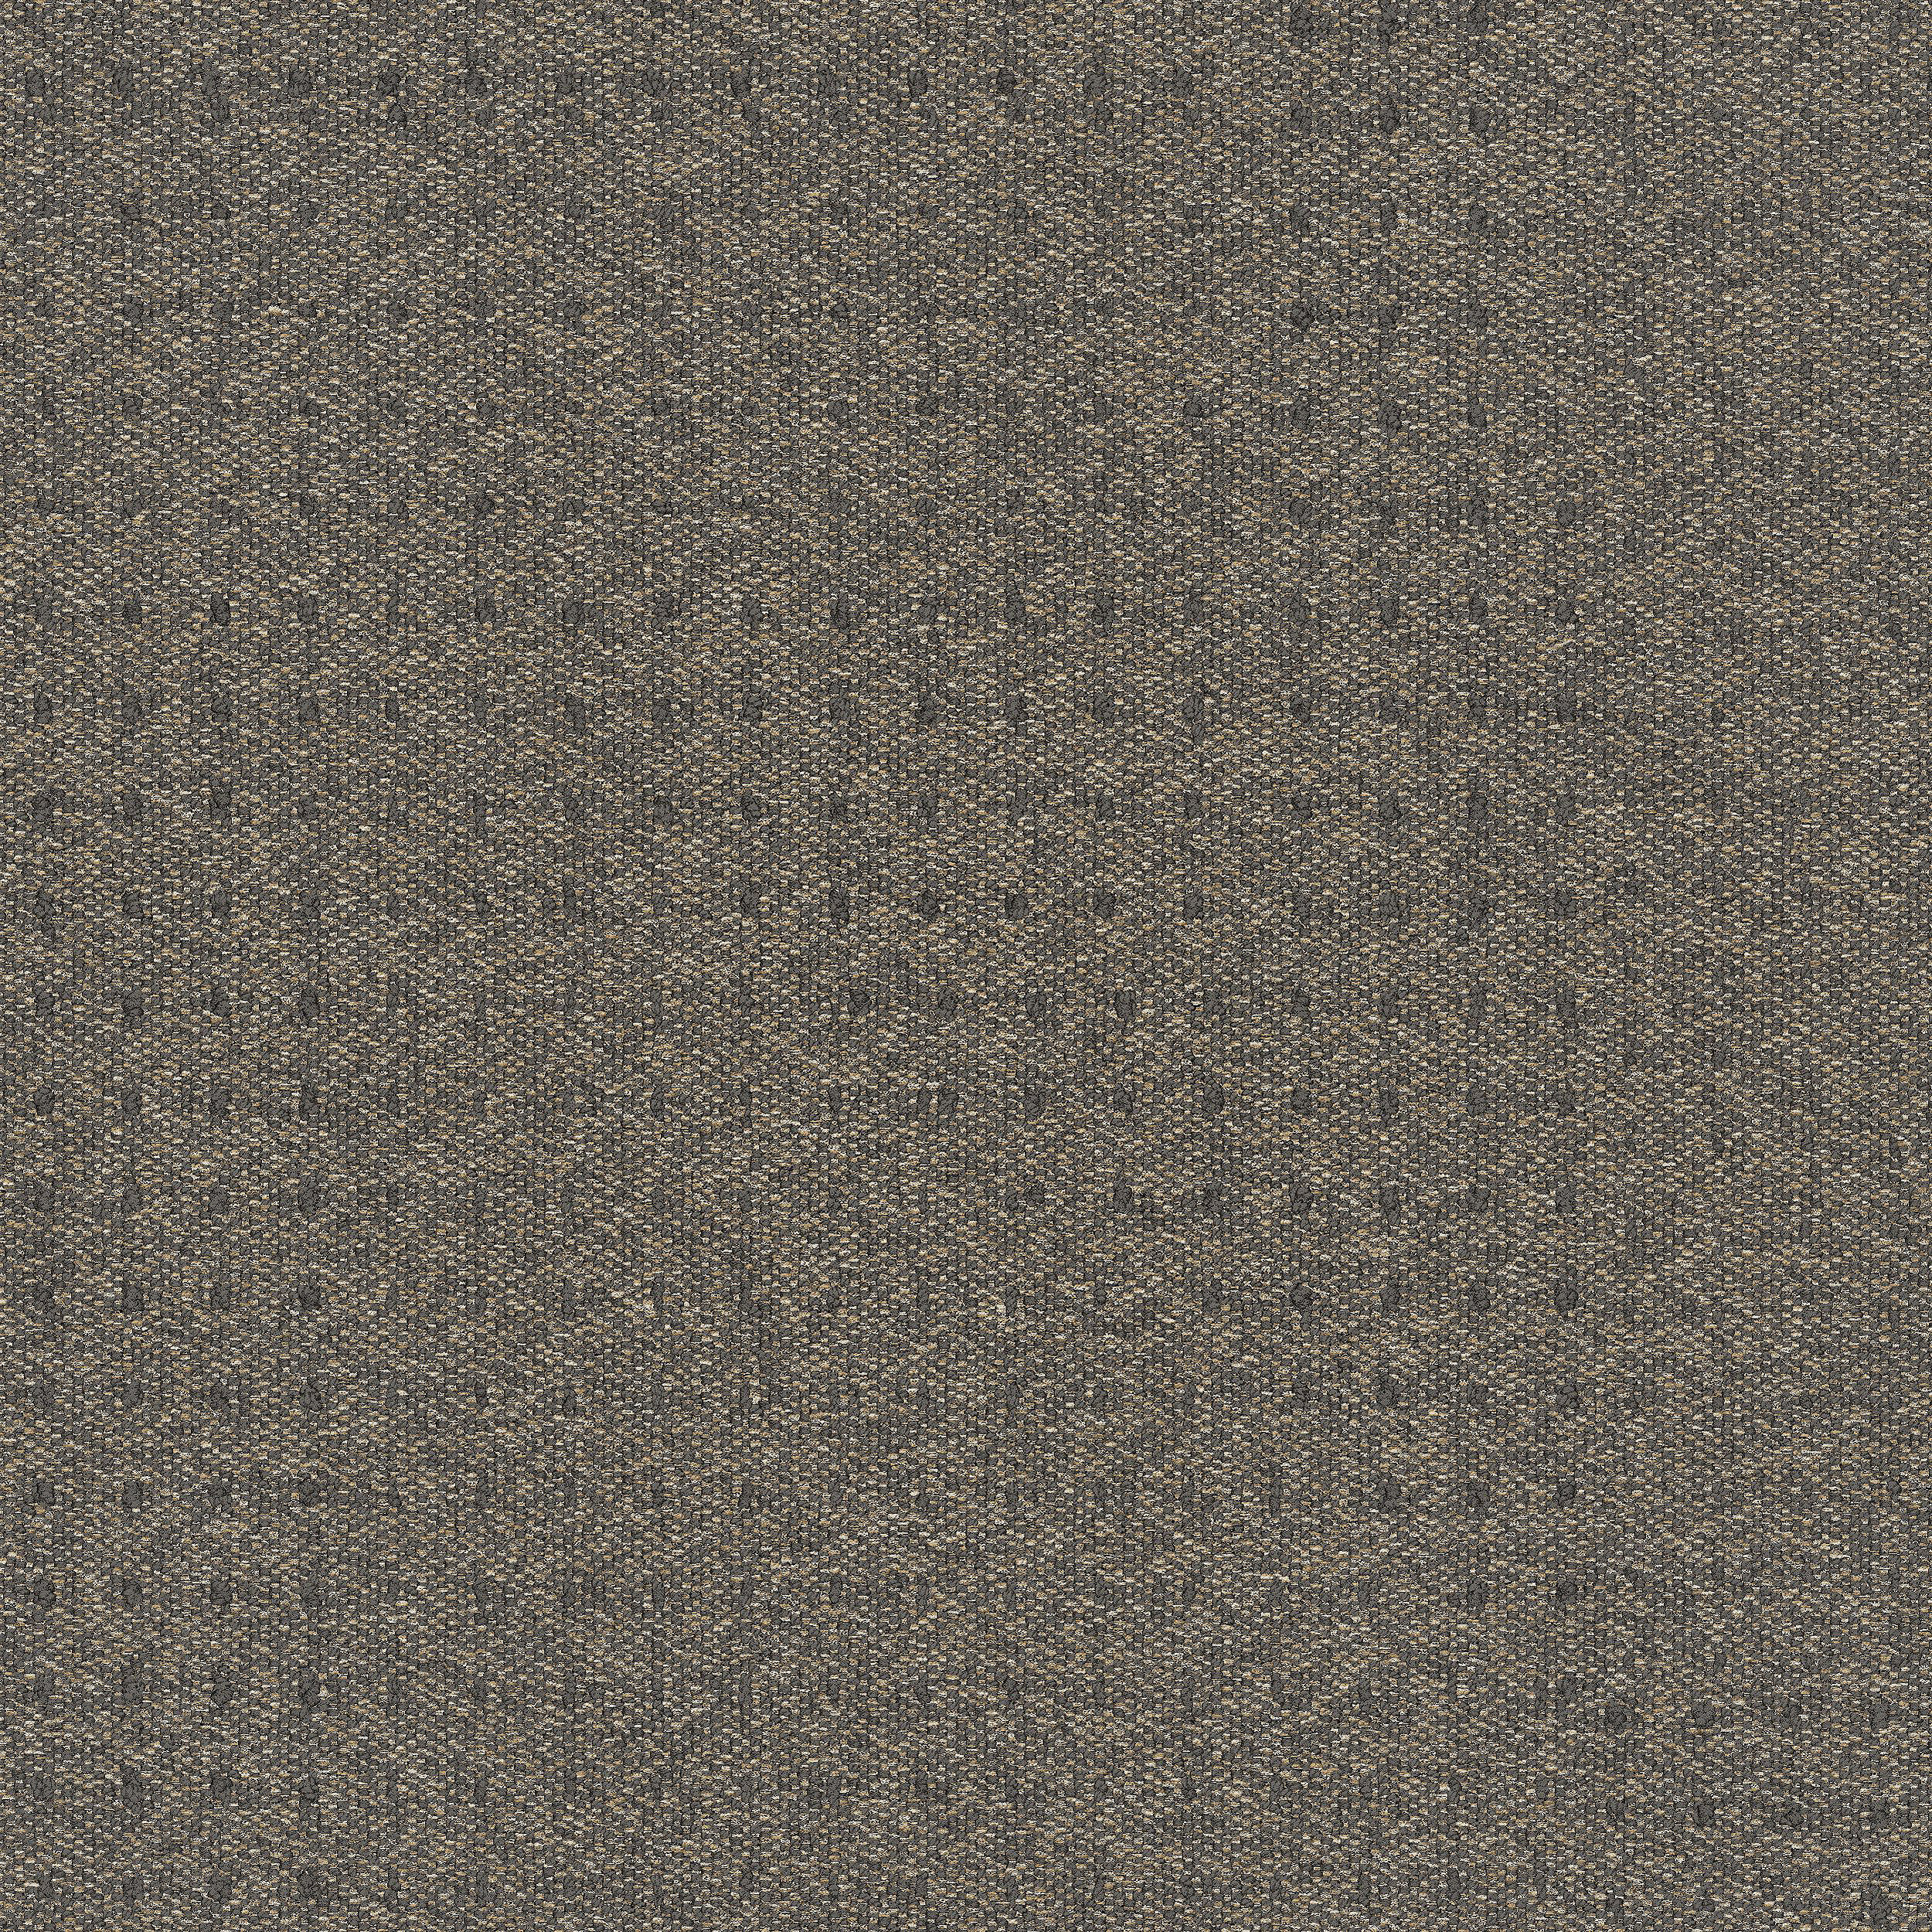 Dover Street Carpet Tile In Concrete Dot número de imagen 5